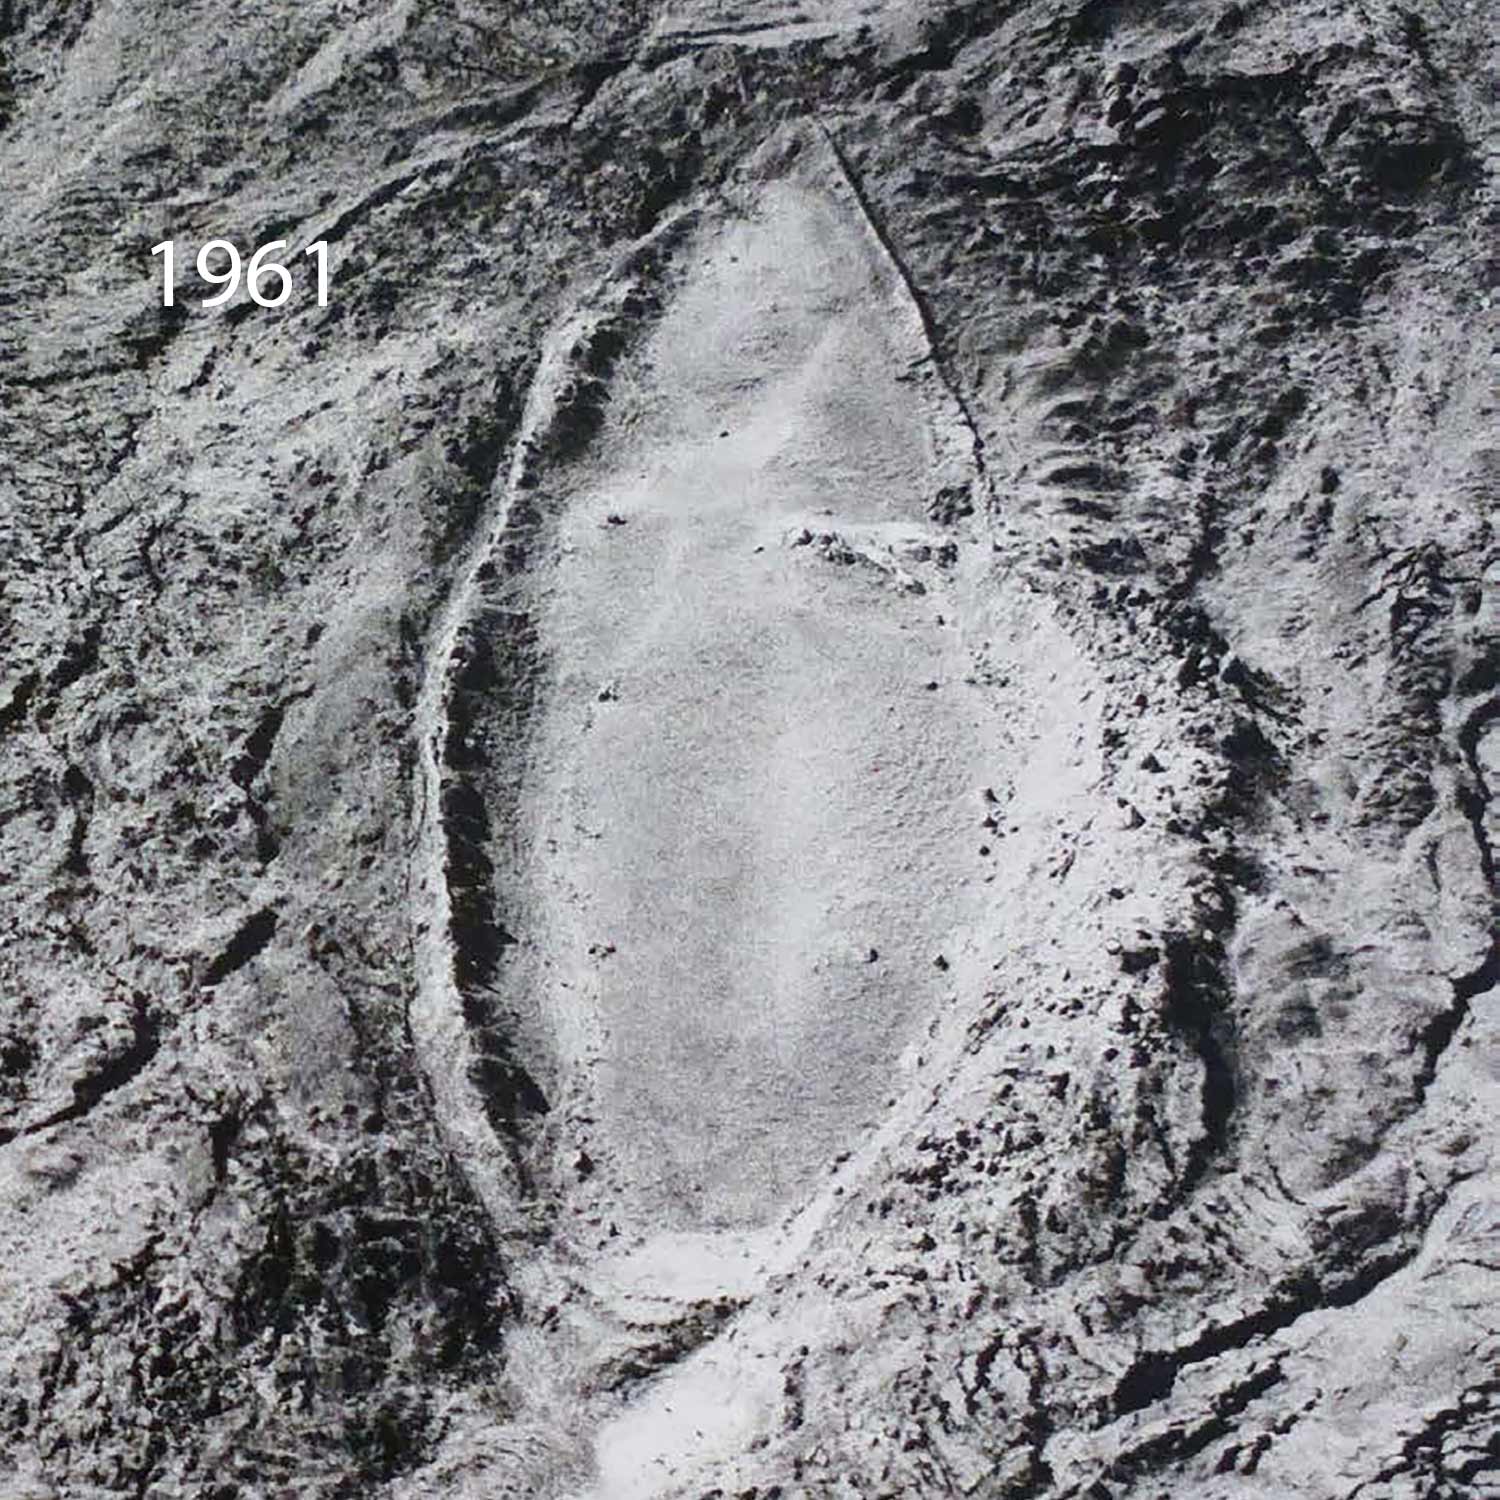 1961 Aerial Photo of Noah's ark (Durupinar site) from Hepimiz Ayni Gemideydik by Cem Sertesen - © Ara Güler